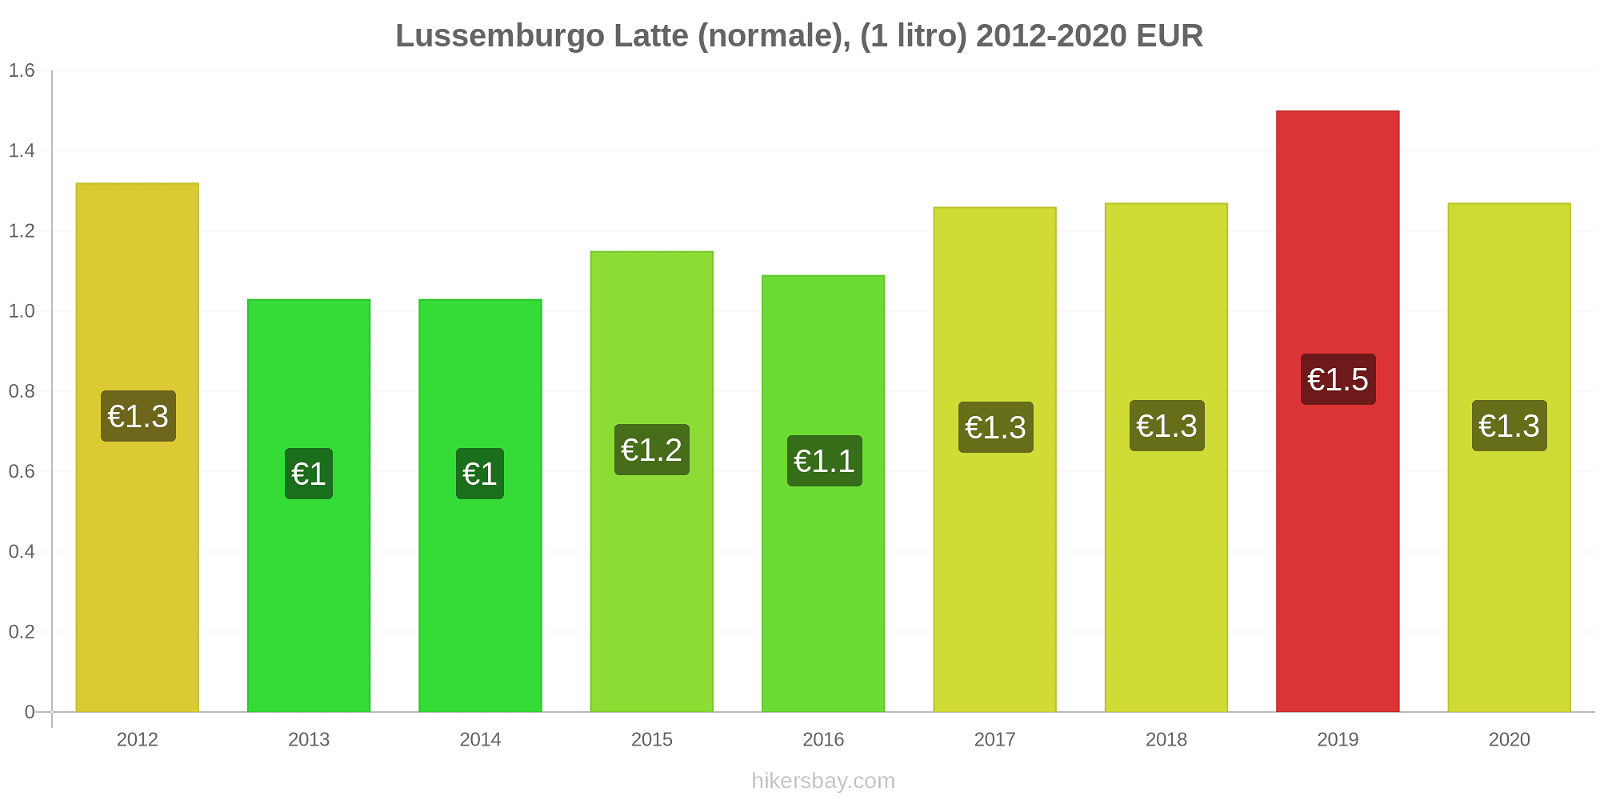 Lussemburgo variazioni di prezzo Latte (1 litro) hikersbay.com